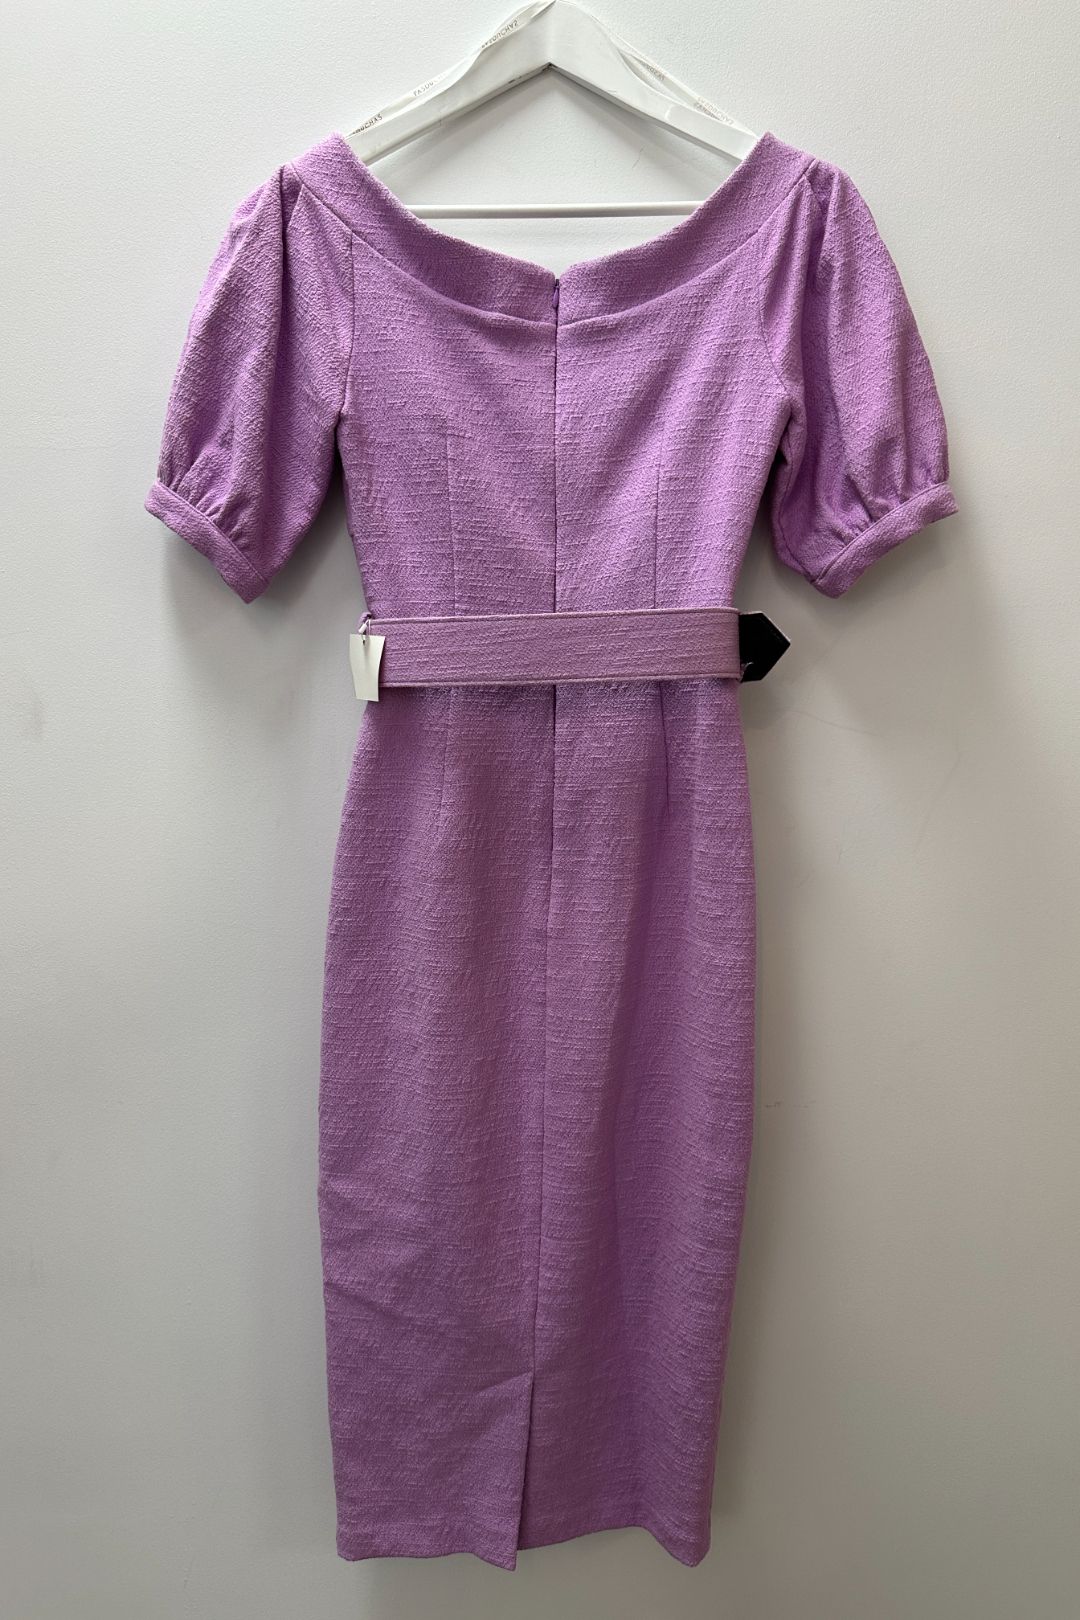 Pasduchas Ardor Belt Dress Midi in Lilac